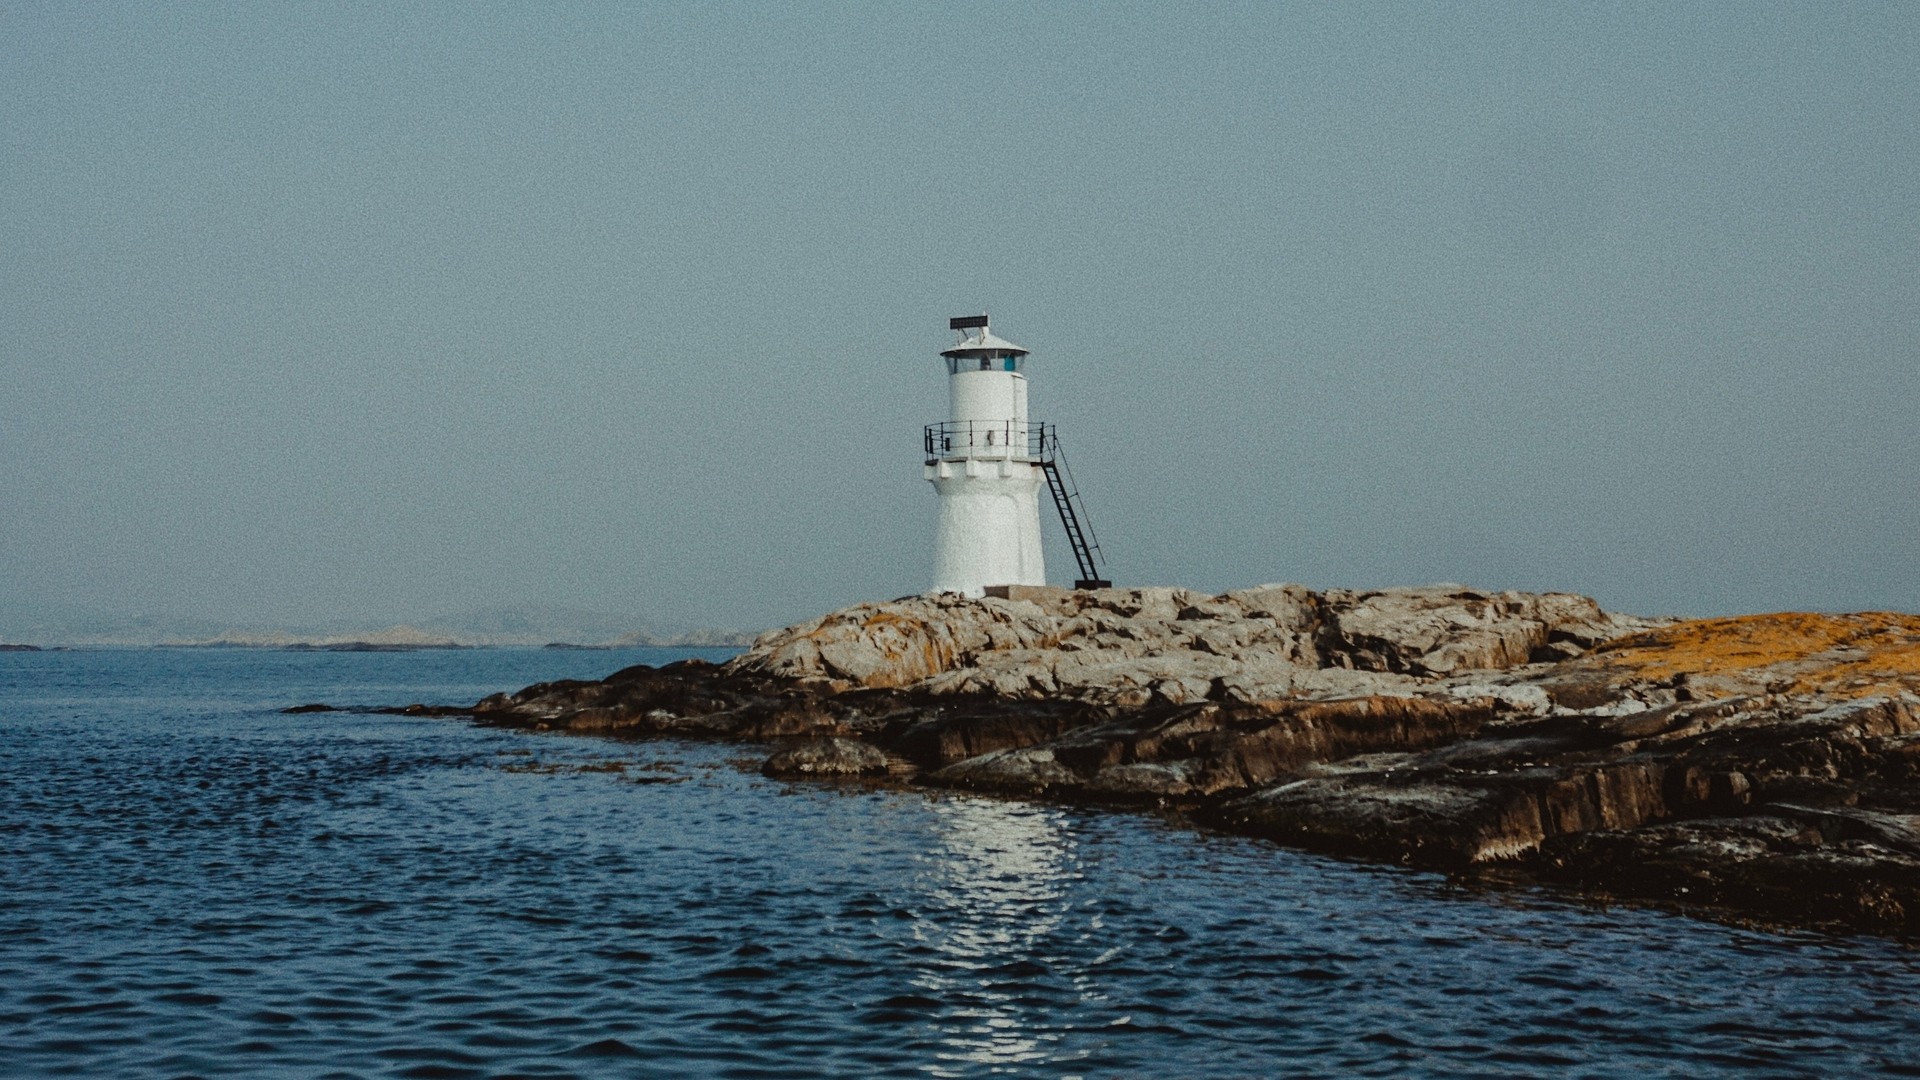 1920x1080 wallpapers: lighthouse, sea, rocks, shore (image)